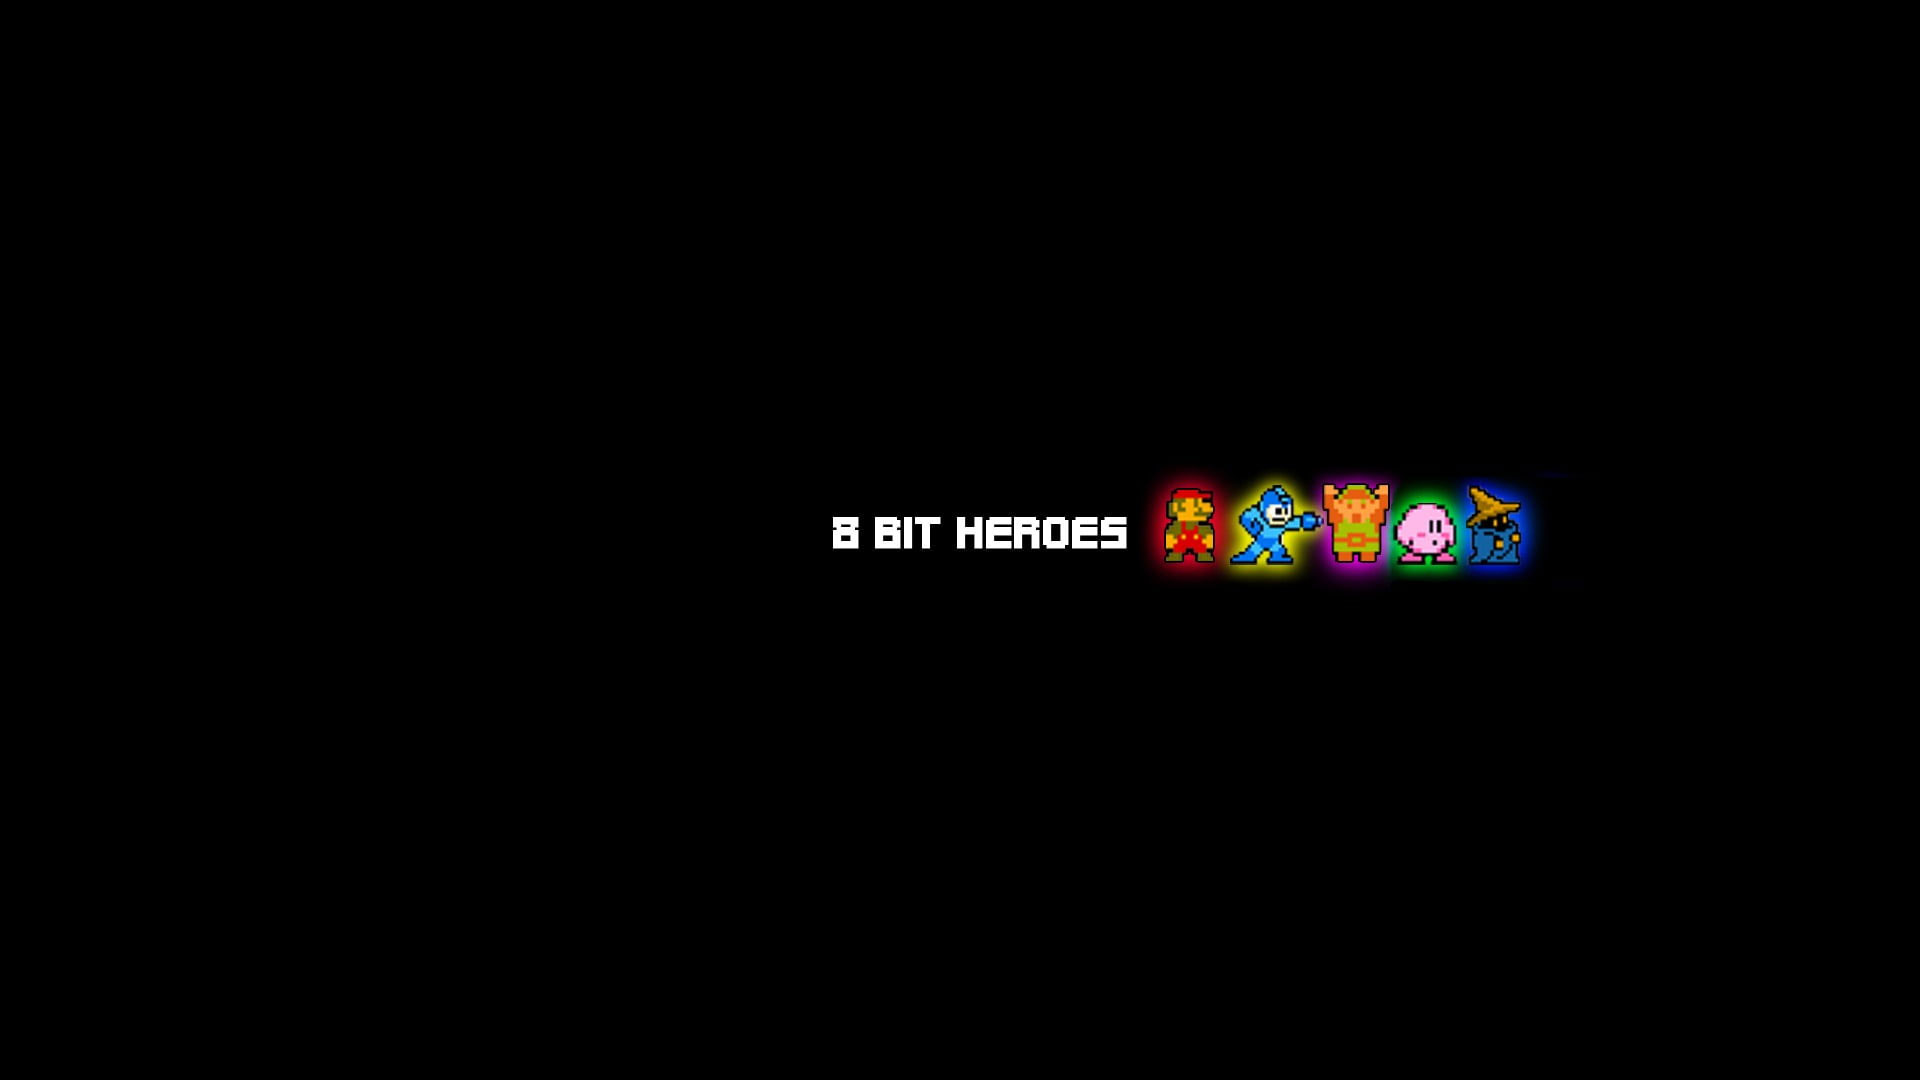 8-bit heroes wallpaper, Super Mario, minimalism